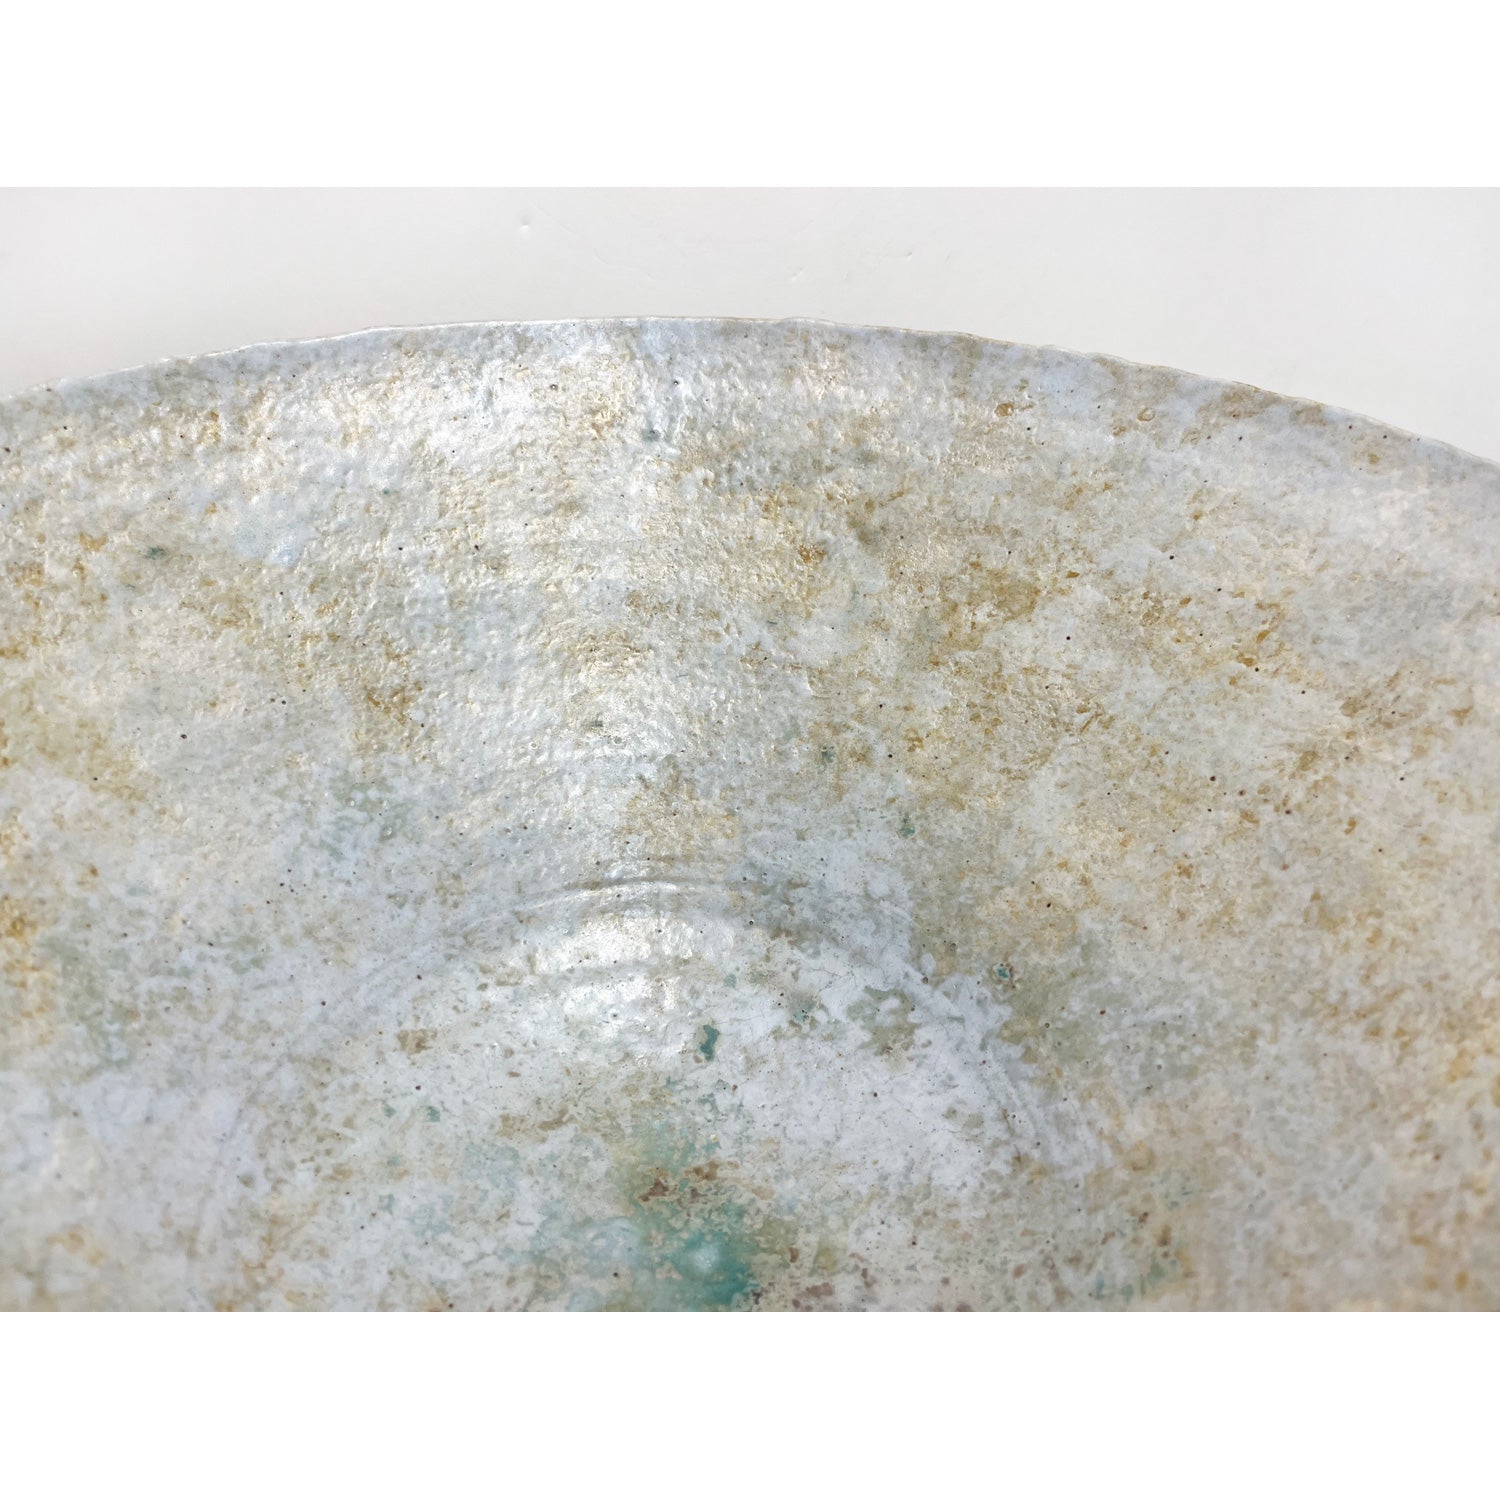 Makiko Hicher - Large Light Blue Bowl, 6" x 16.5" x 16.5"